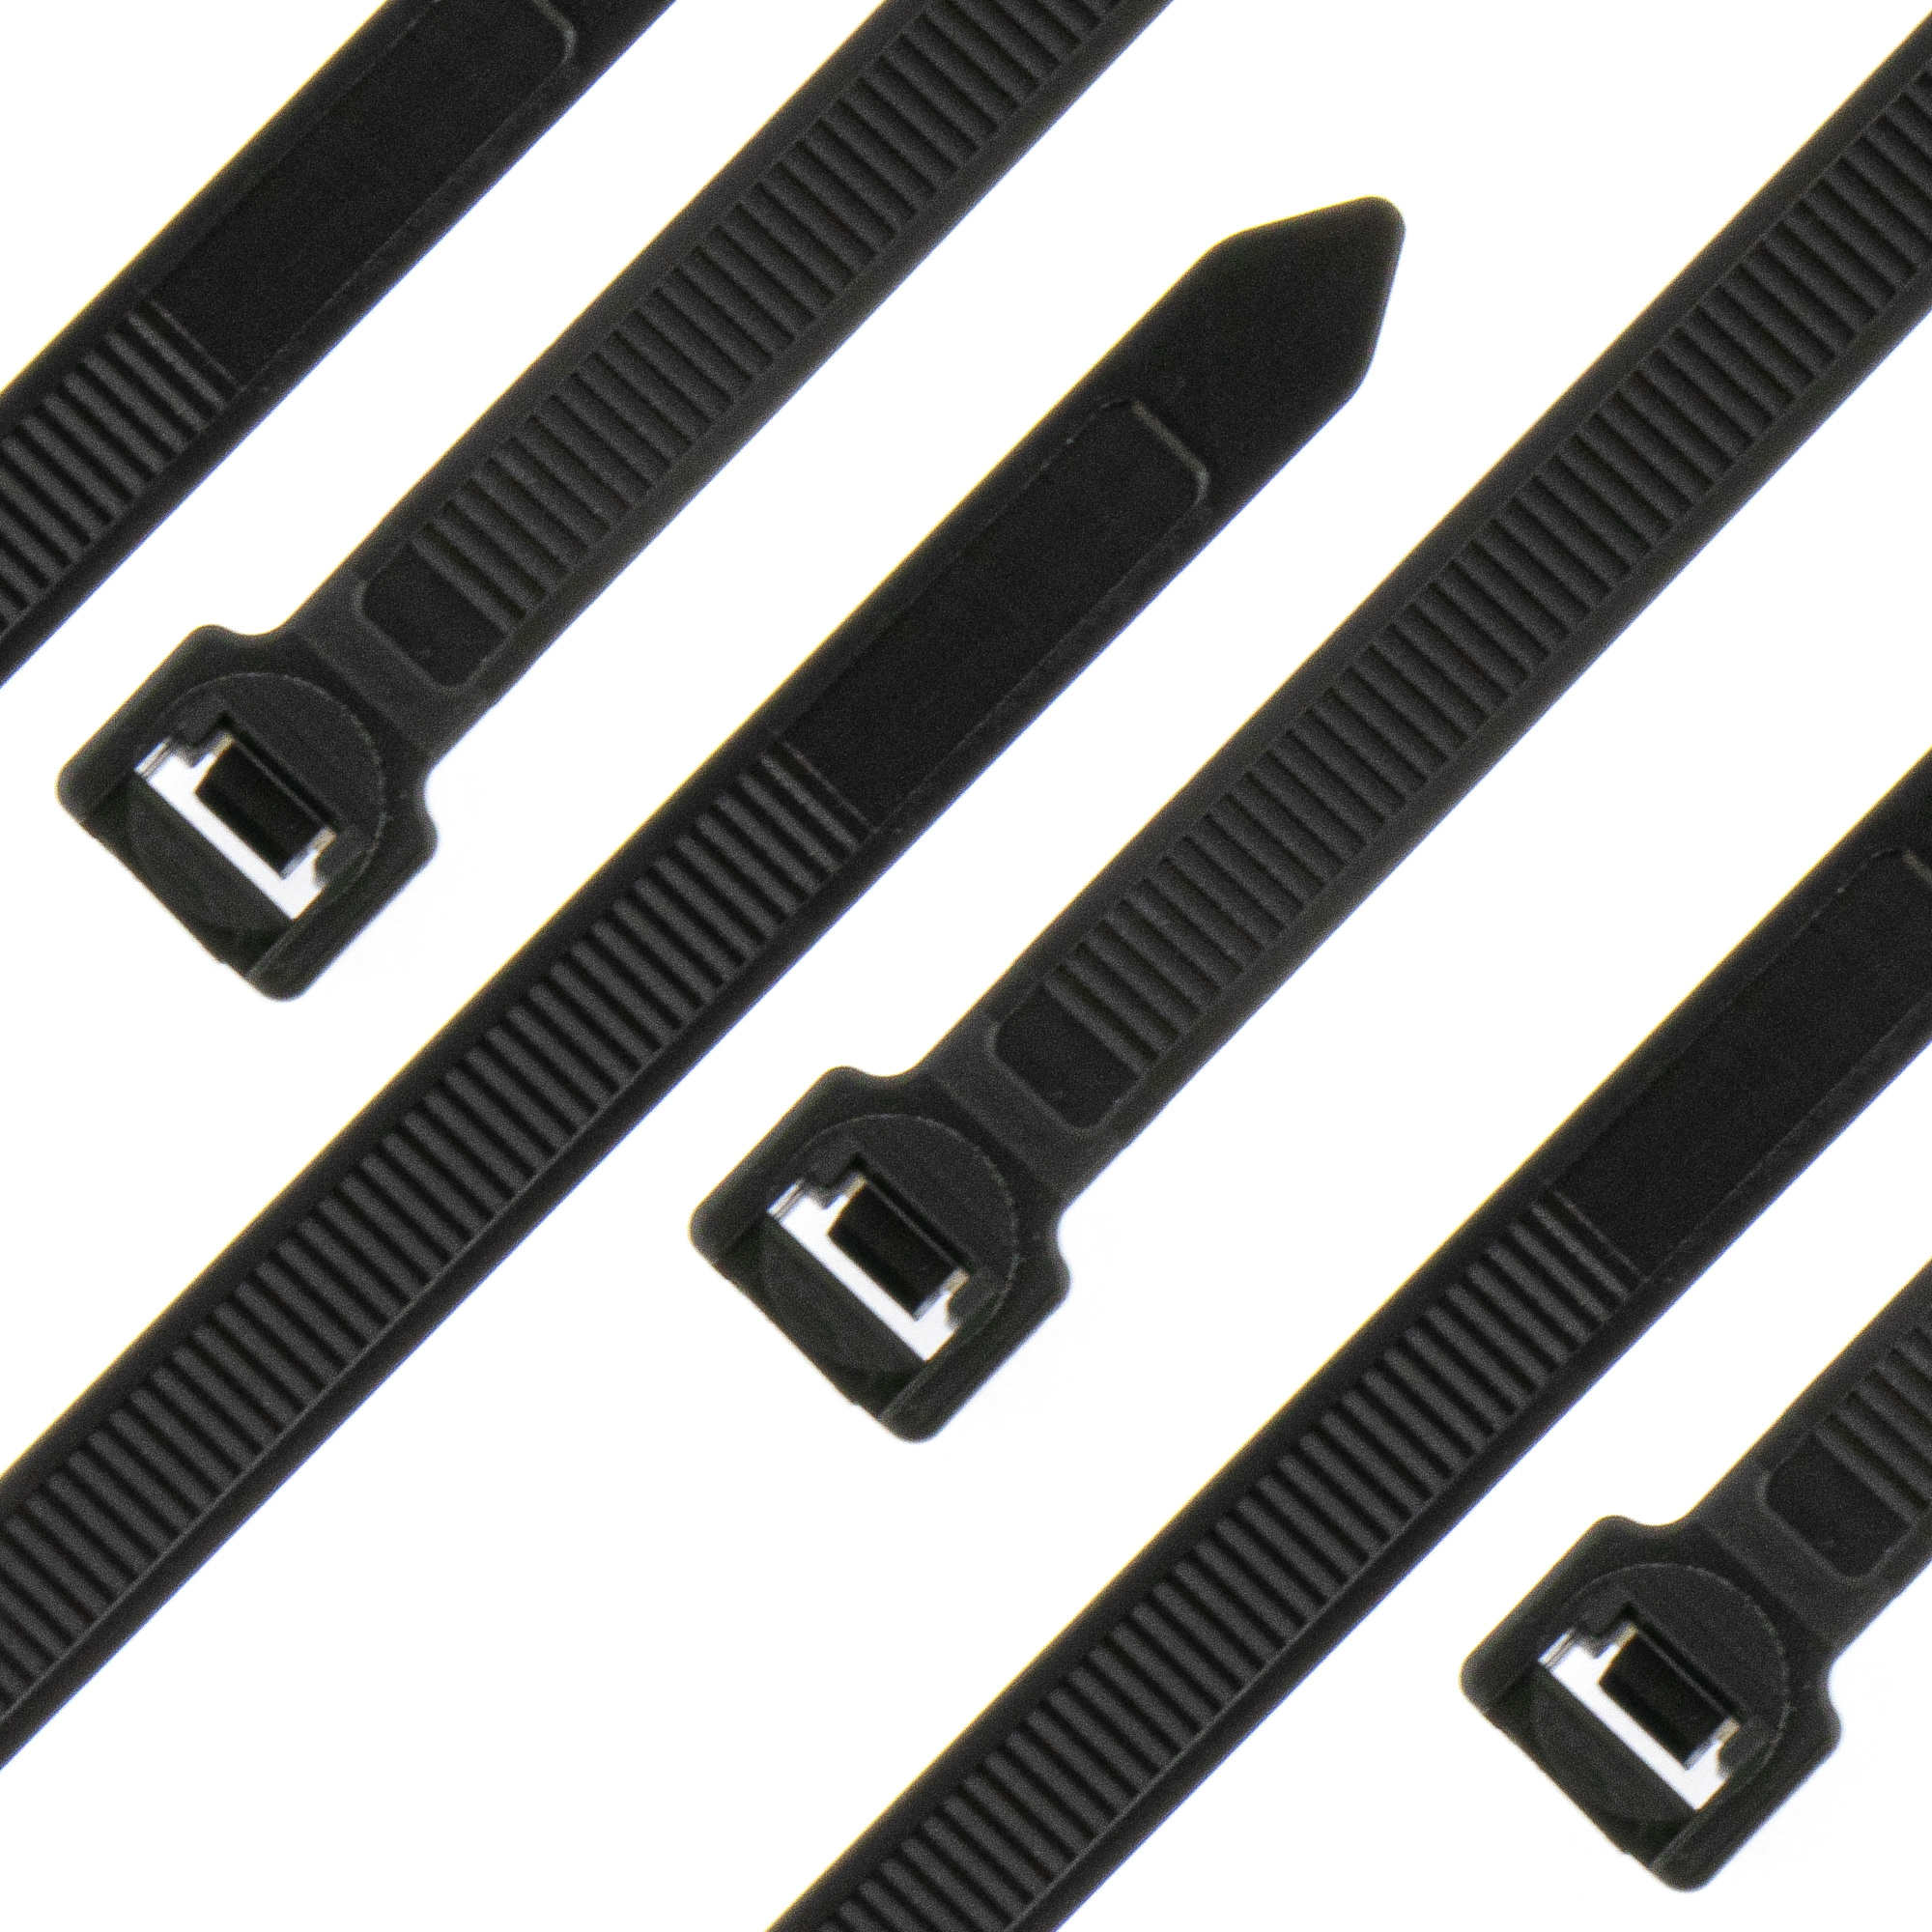 Cable tie self-locking 550 x 7,6mm, black, 100PCS